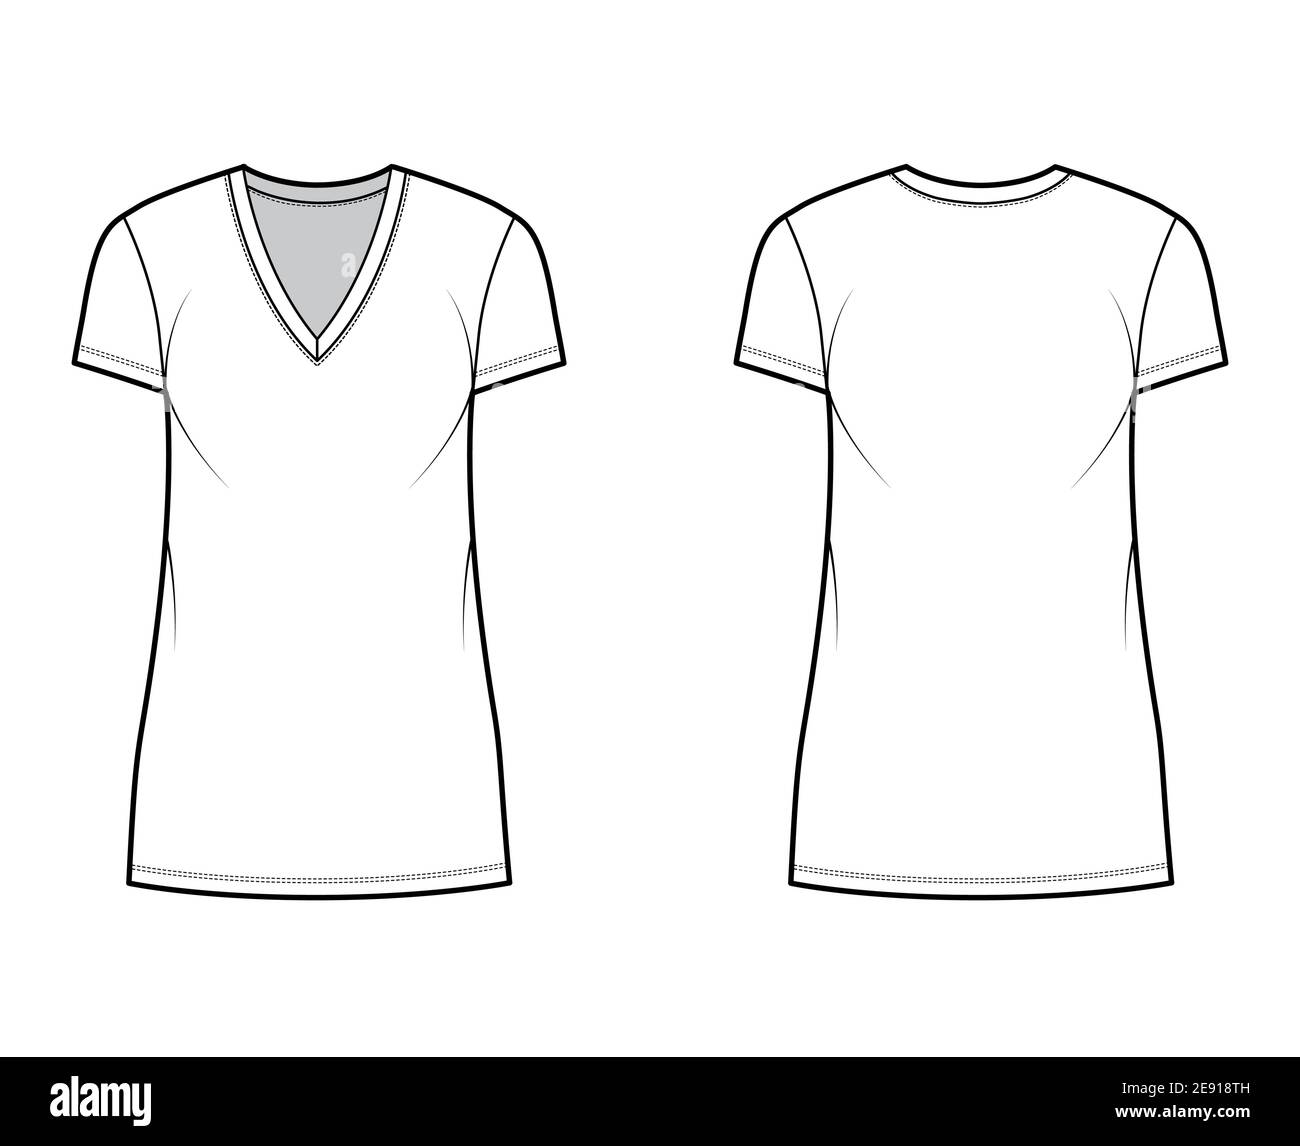 T-shirt dress technical fashion illustration with V-neck, short sleeves ...